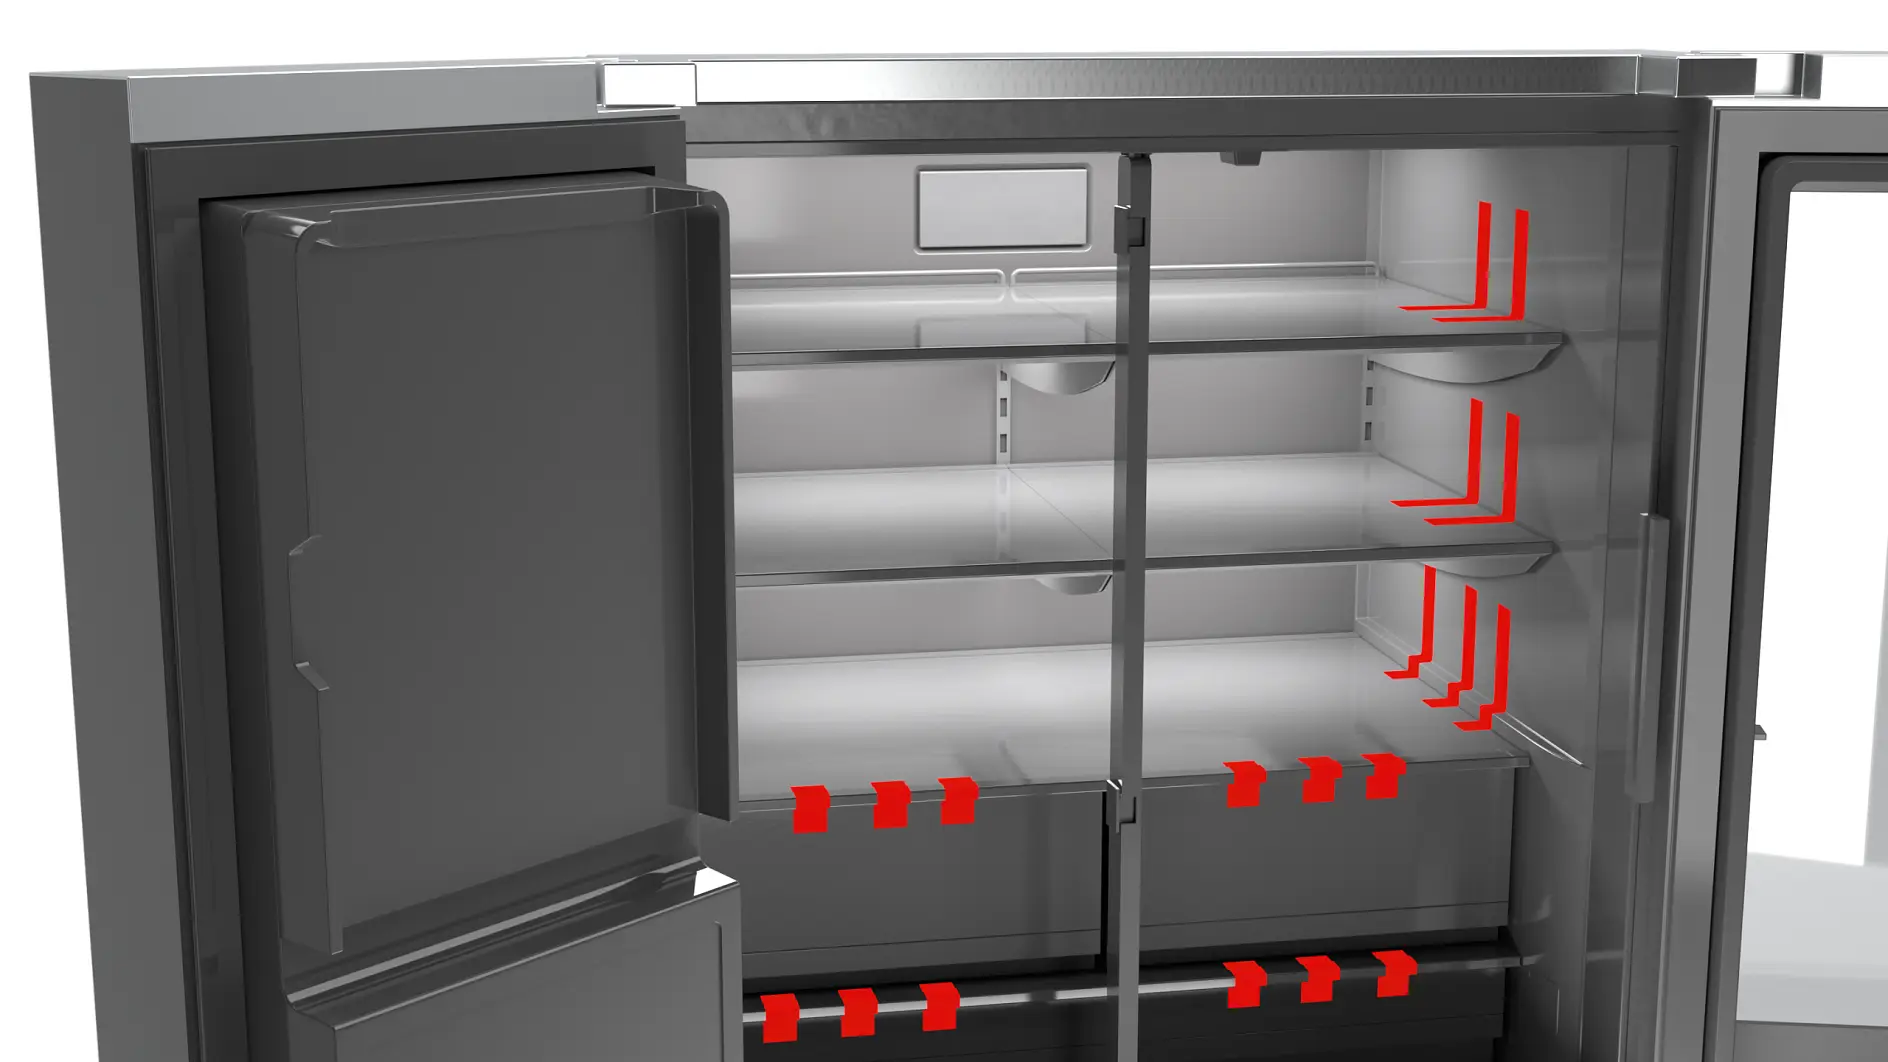 Appliances refrigerator strapping transport securing illustration